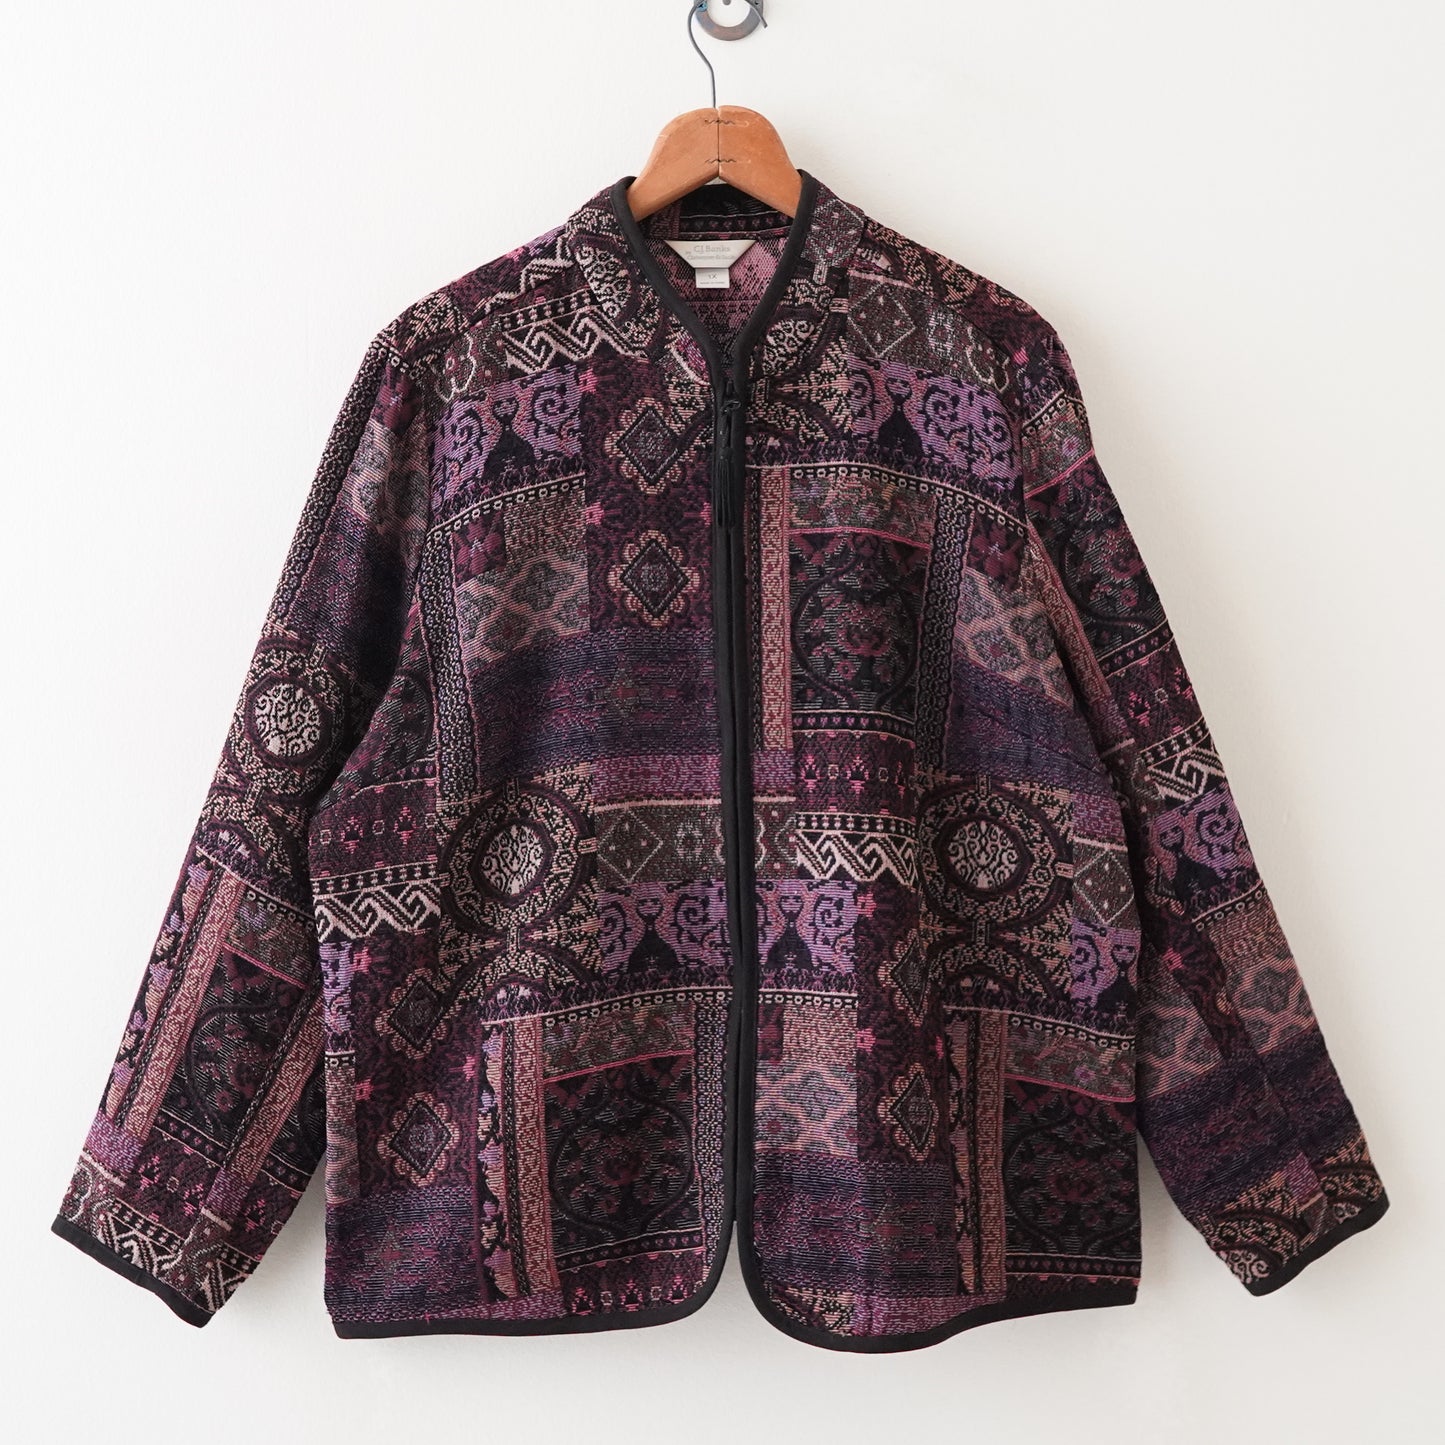 Embroidery gobelin jacket